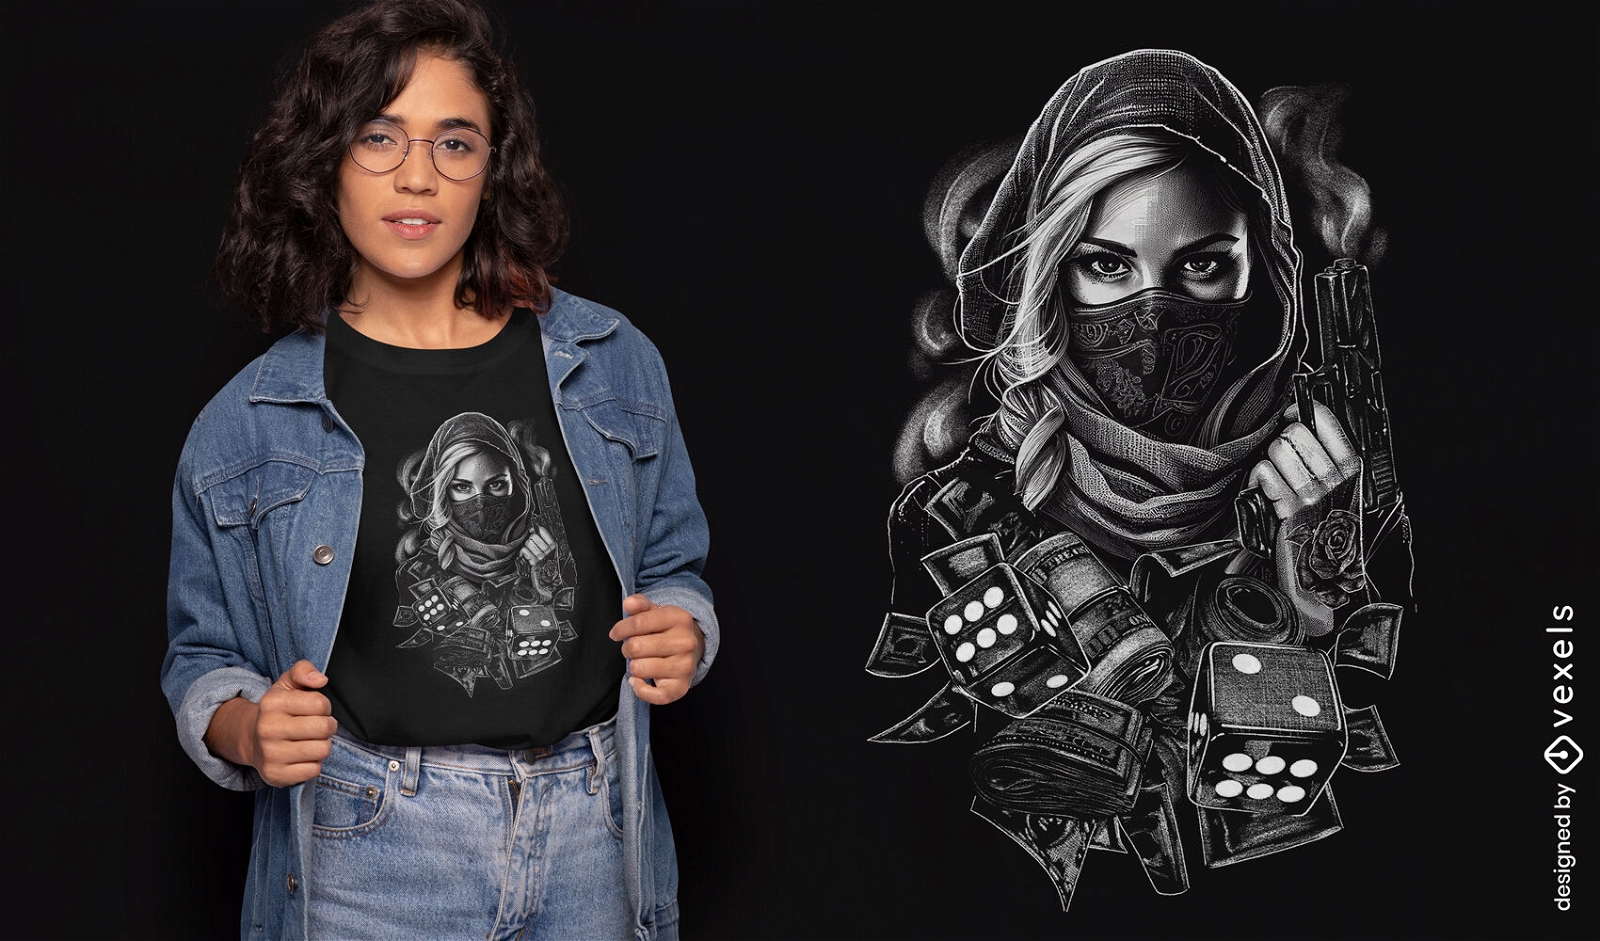 Armed woman t-shirt design